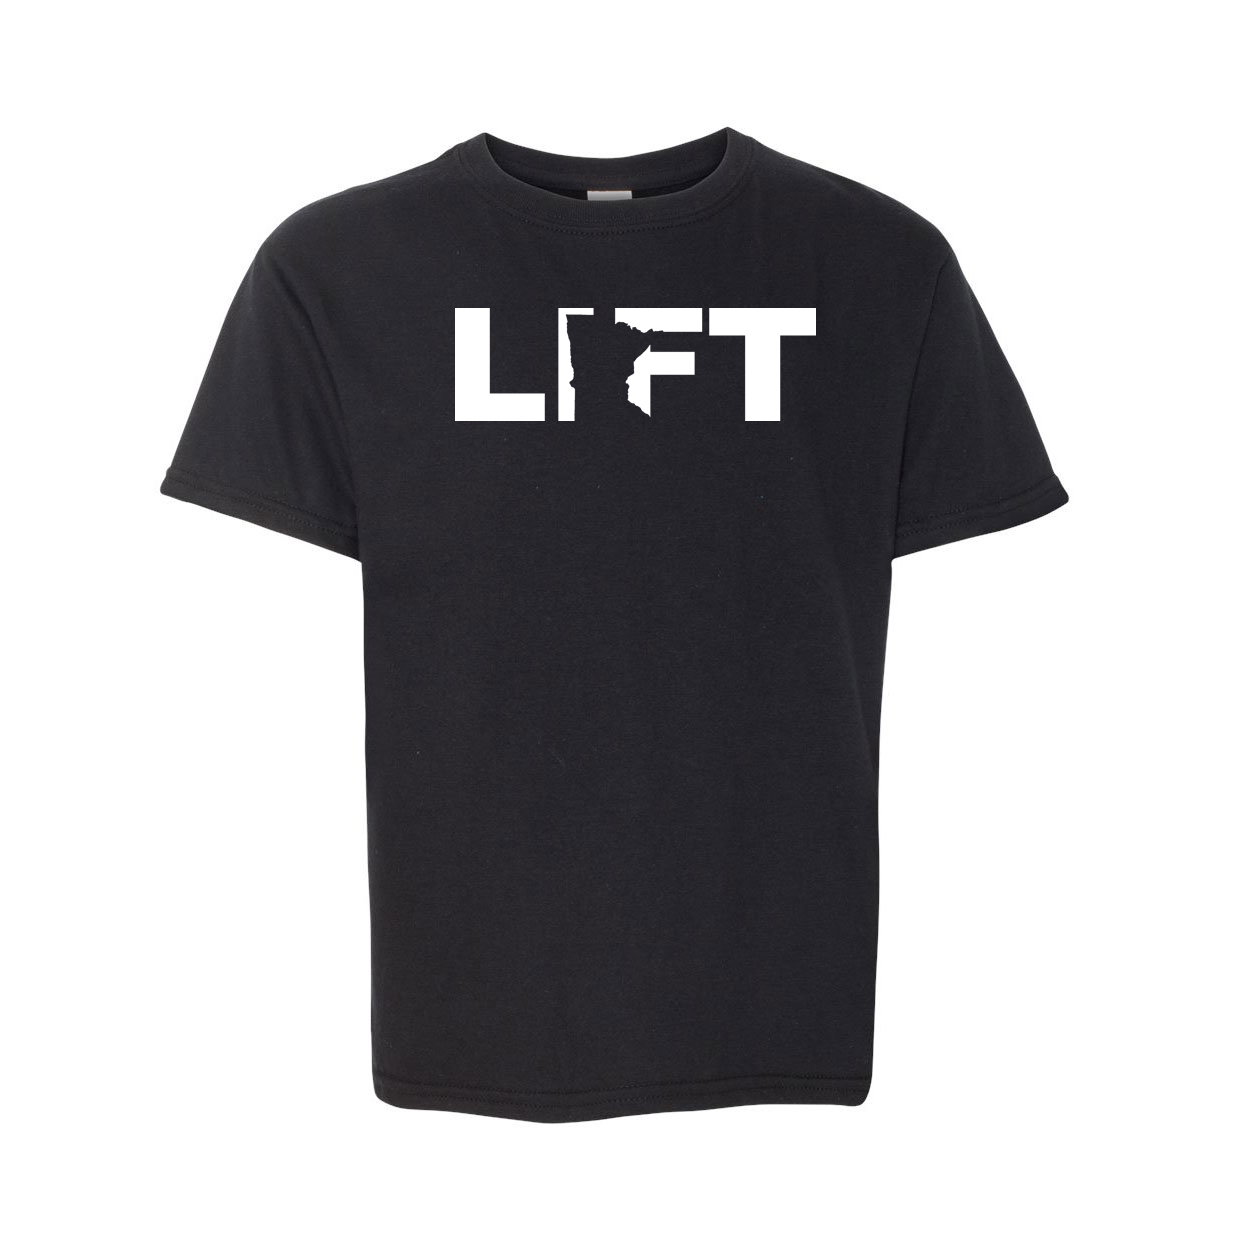 Lift Minnesota Classic Youth T-Shirt Black (White Logo)